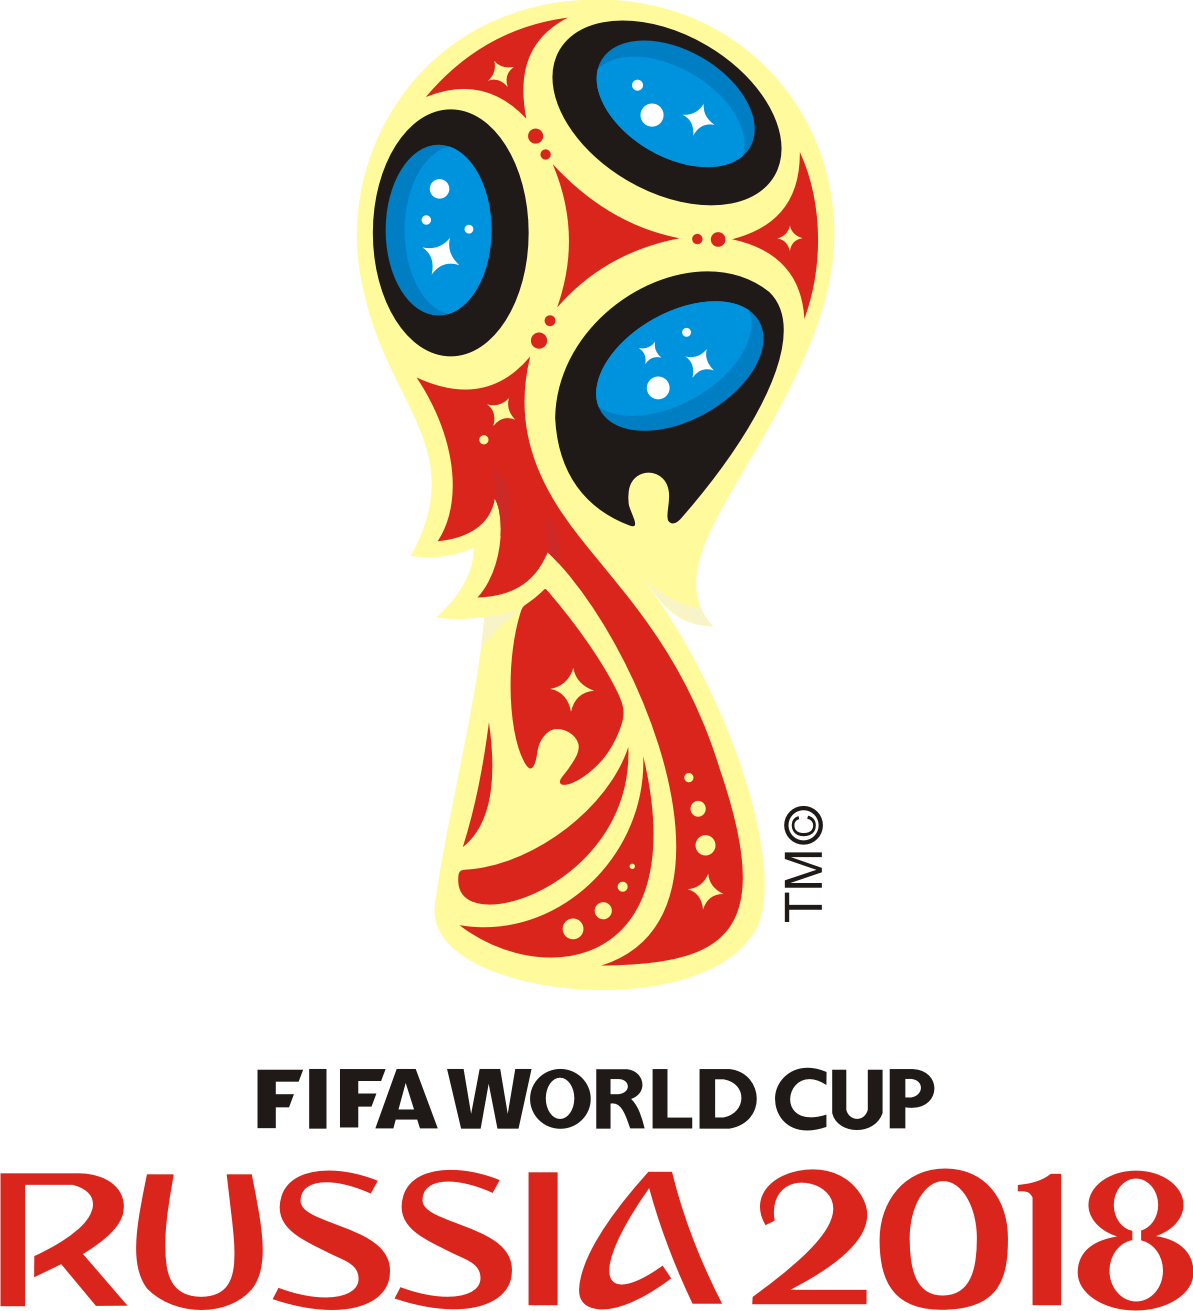 Russia 2018 FIFA World Cup Logo - Free Vector CDR - Logo ...